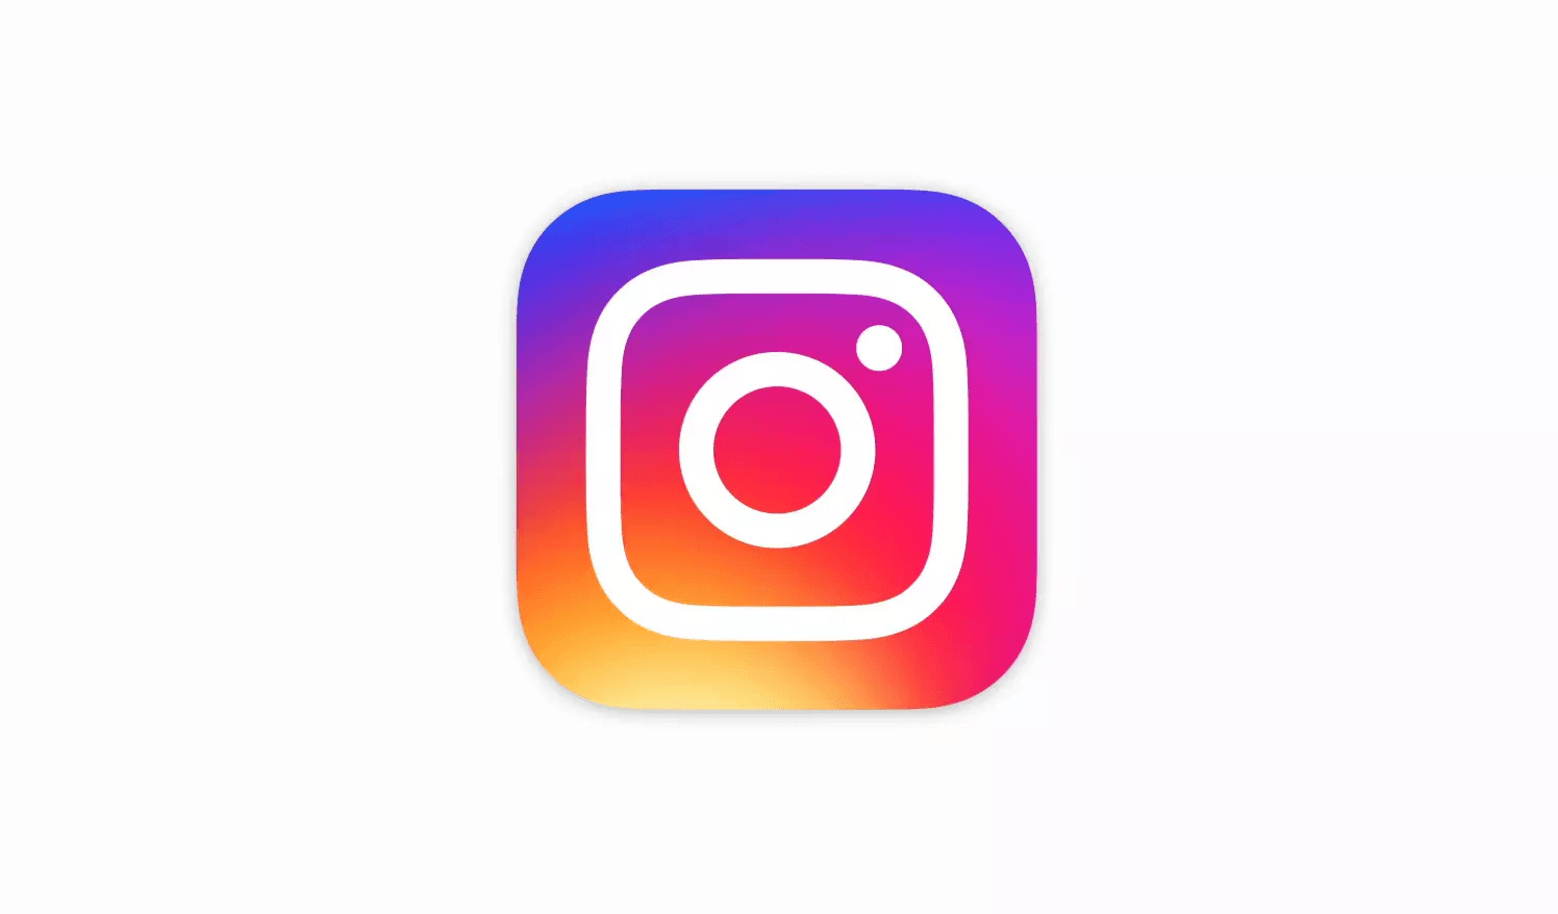 Instalogo Logo - The Best Twitter Reactions To The New Instagram Logo & App Redesign